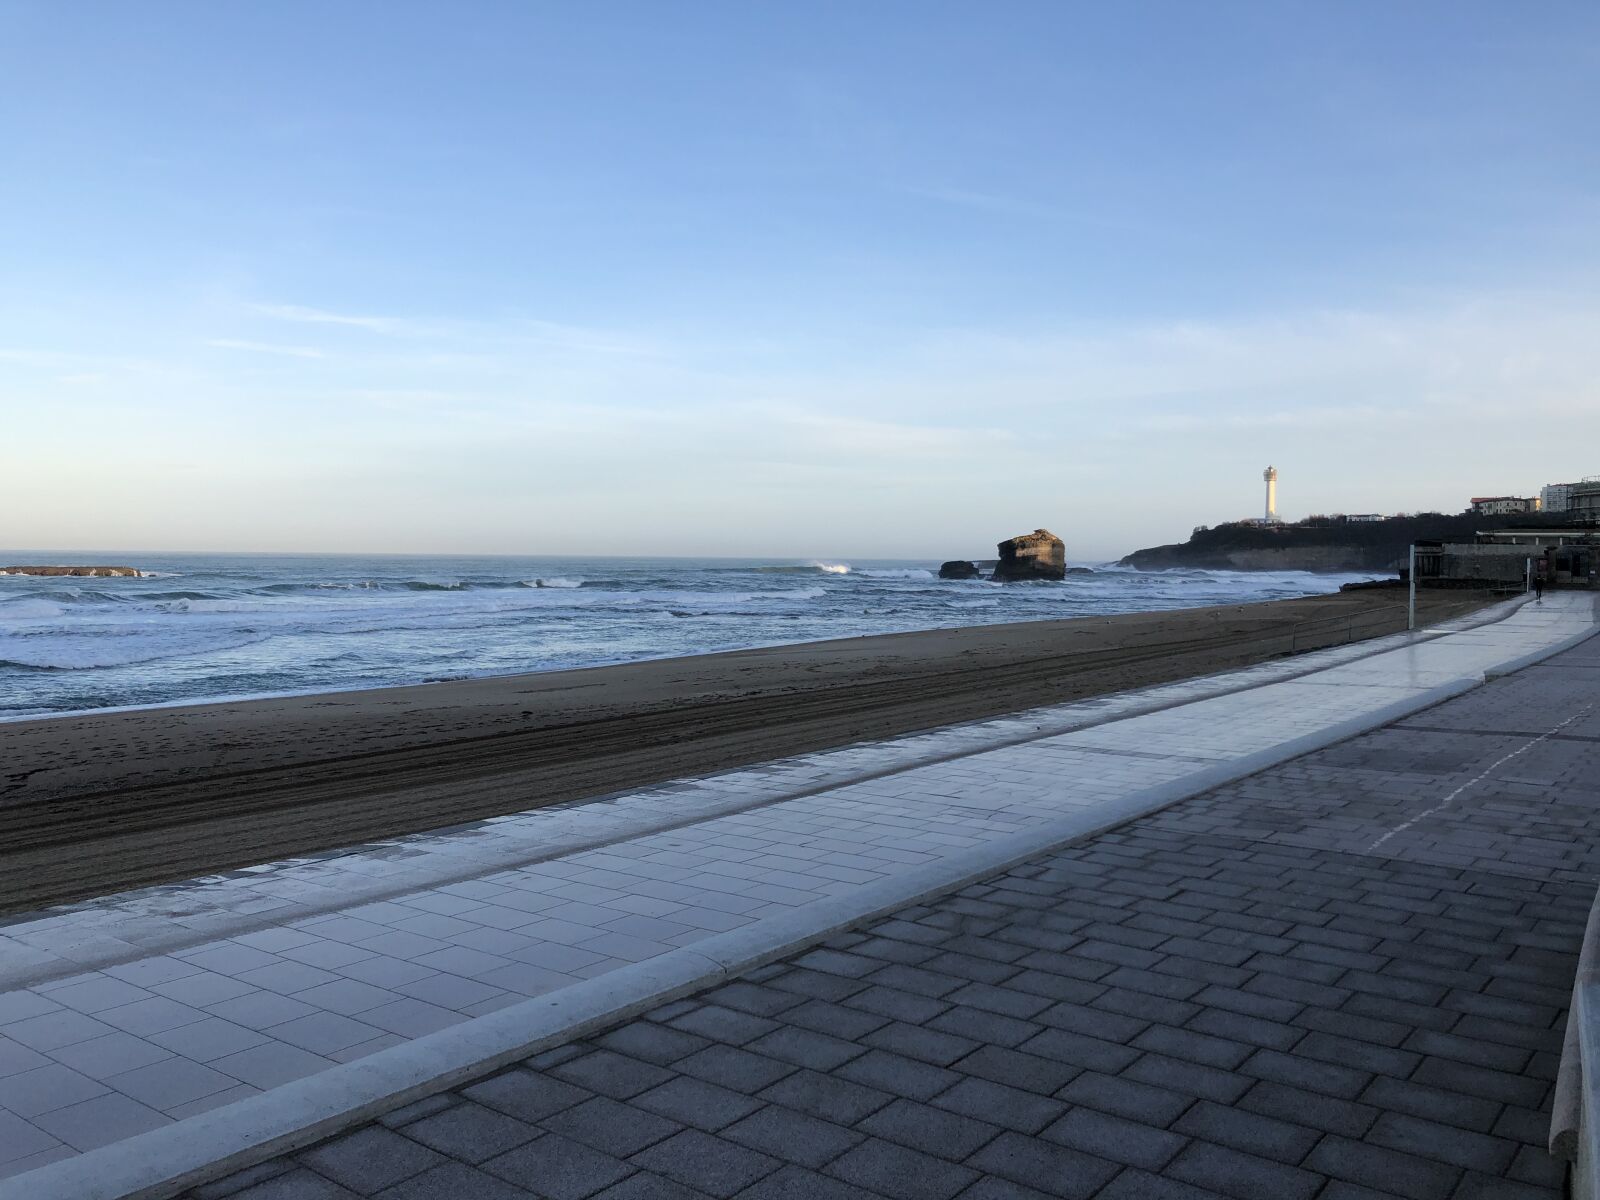 Apple iPhone 8 + iPhone 8 back camera 3.99mm f/1.8 sample photo. Beach, ocean, biarritz photography